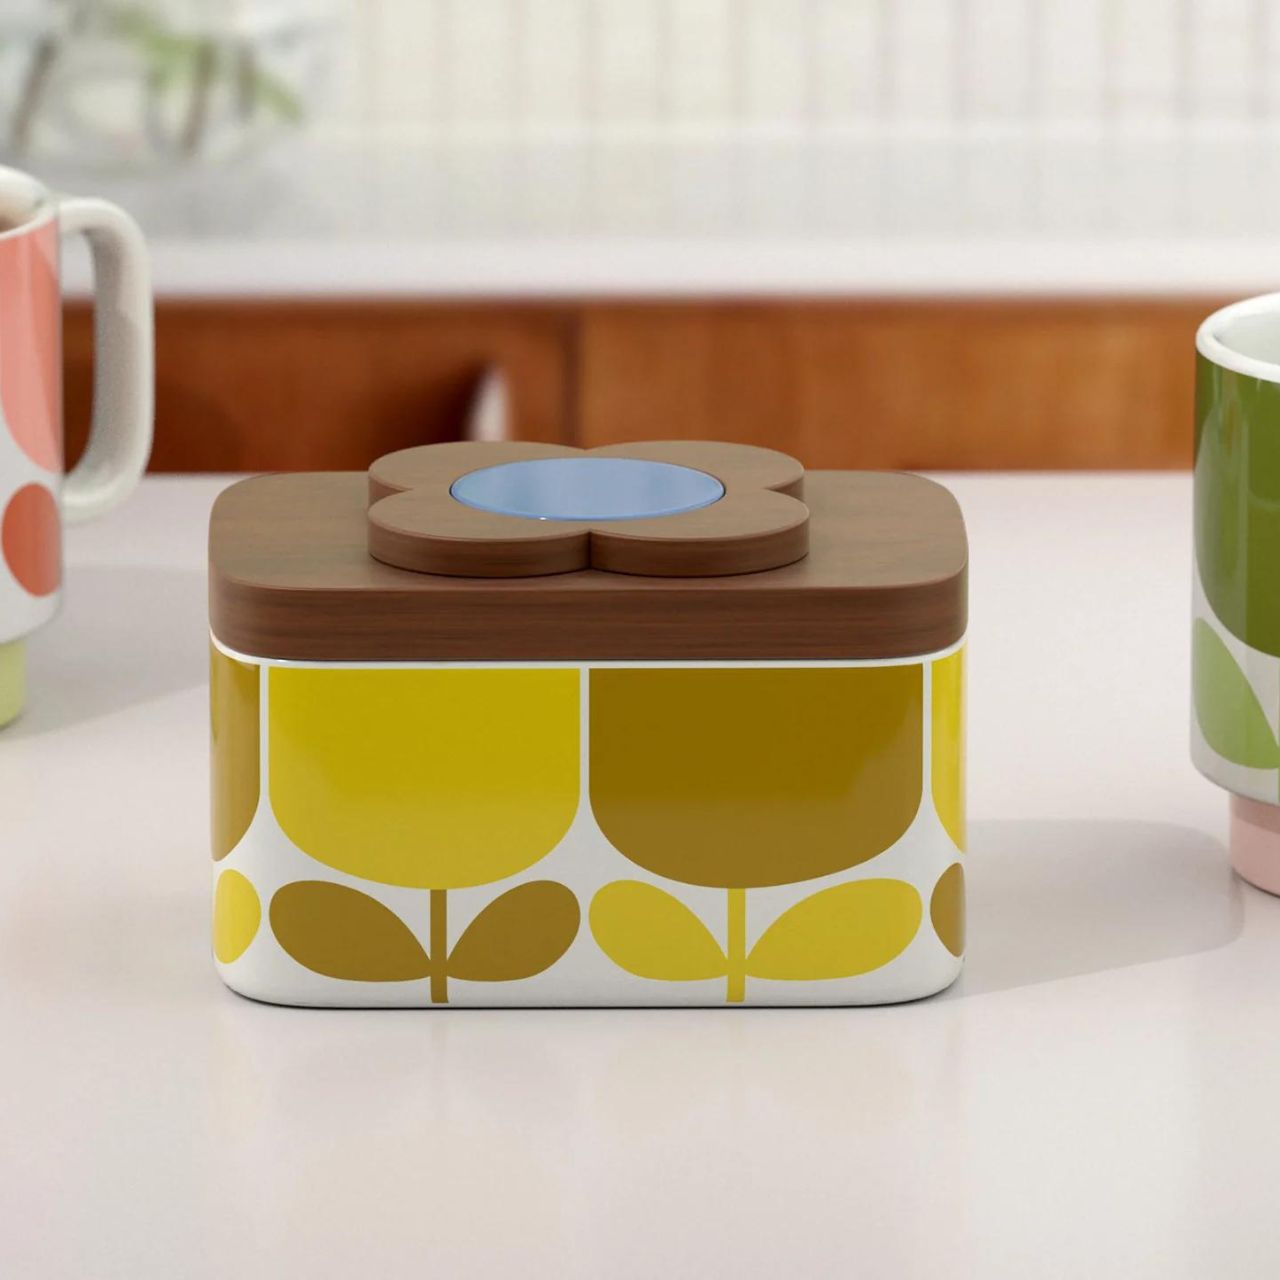 Ceramic butter dish, featuring Orla Kiely’s Block-Flower print in Ochre colourway.